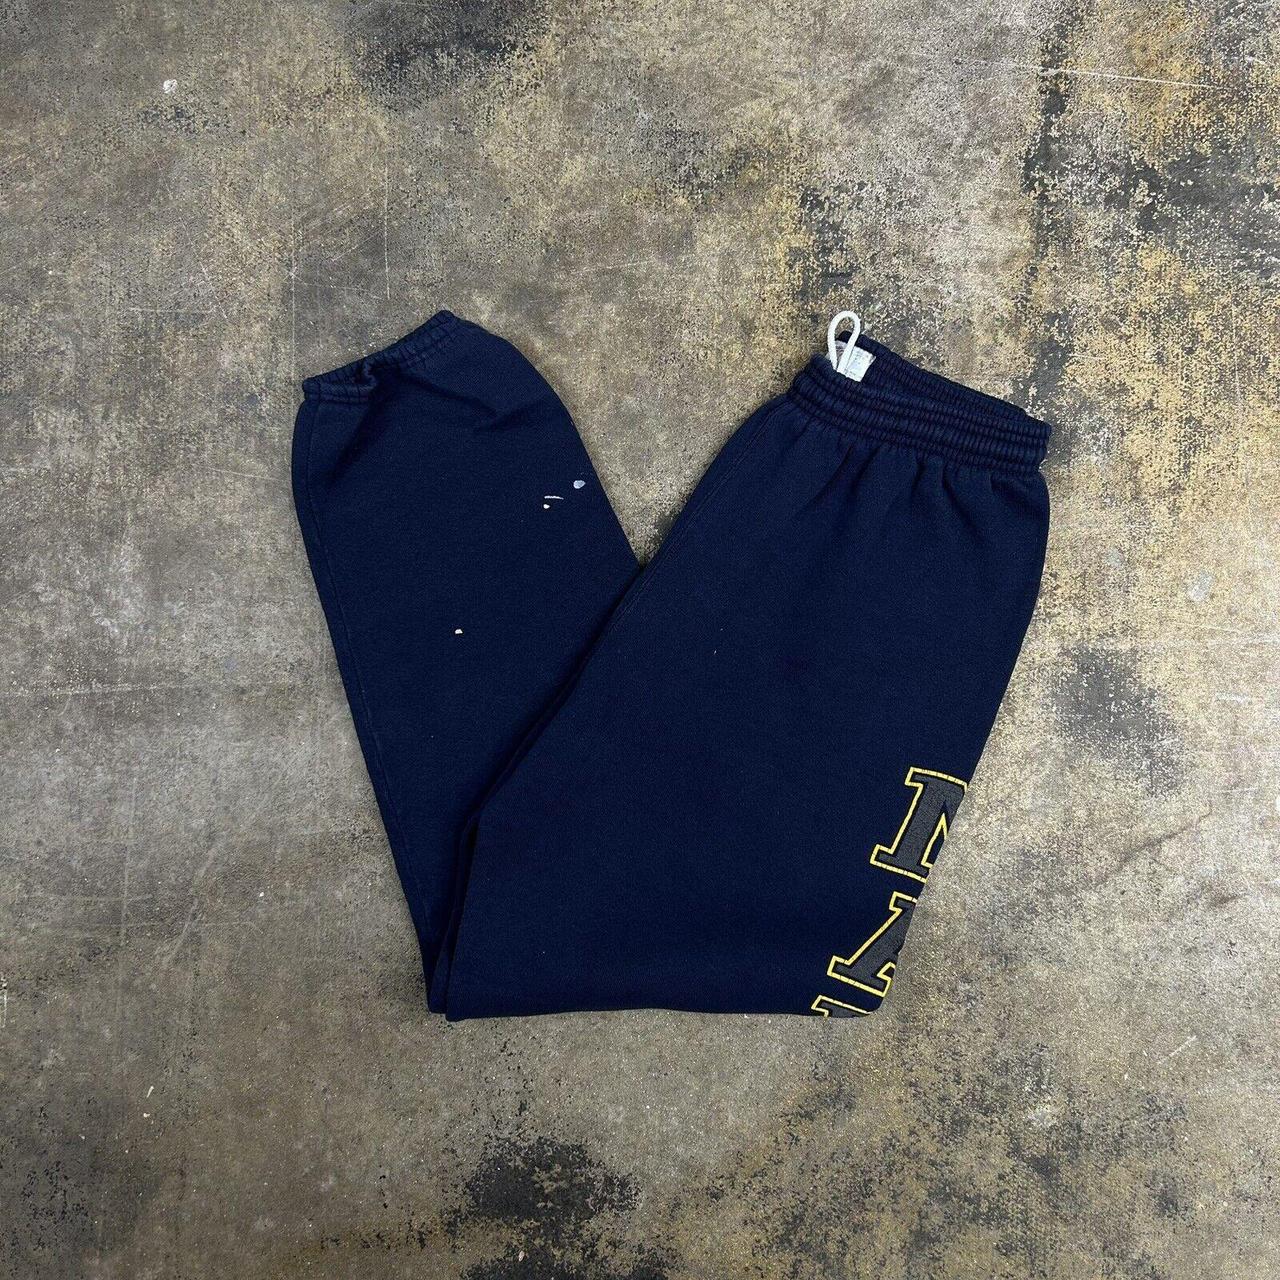 Vintage 90s USA Navy Sweatpants Joggers Sports Pants... - Depop